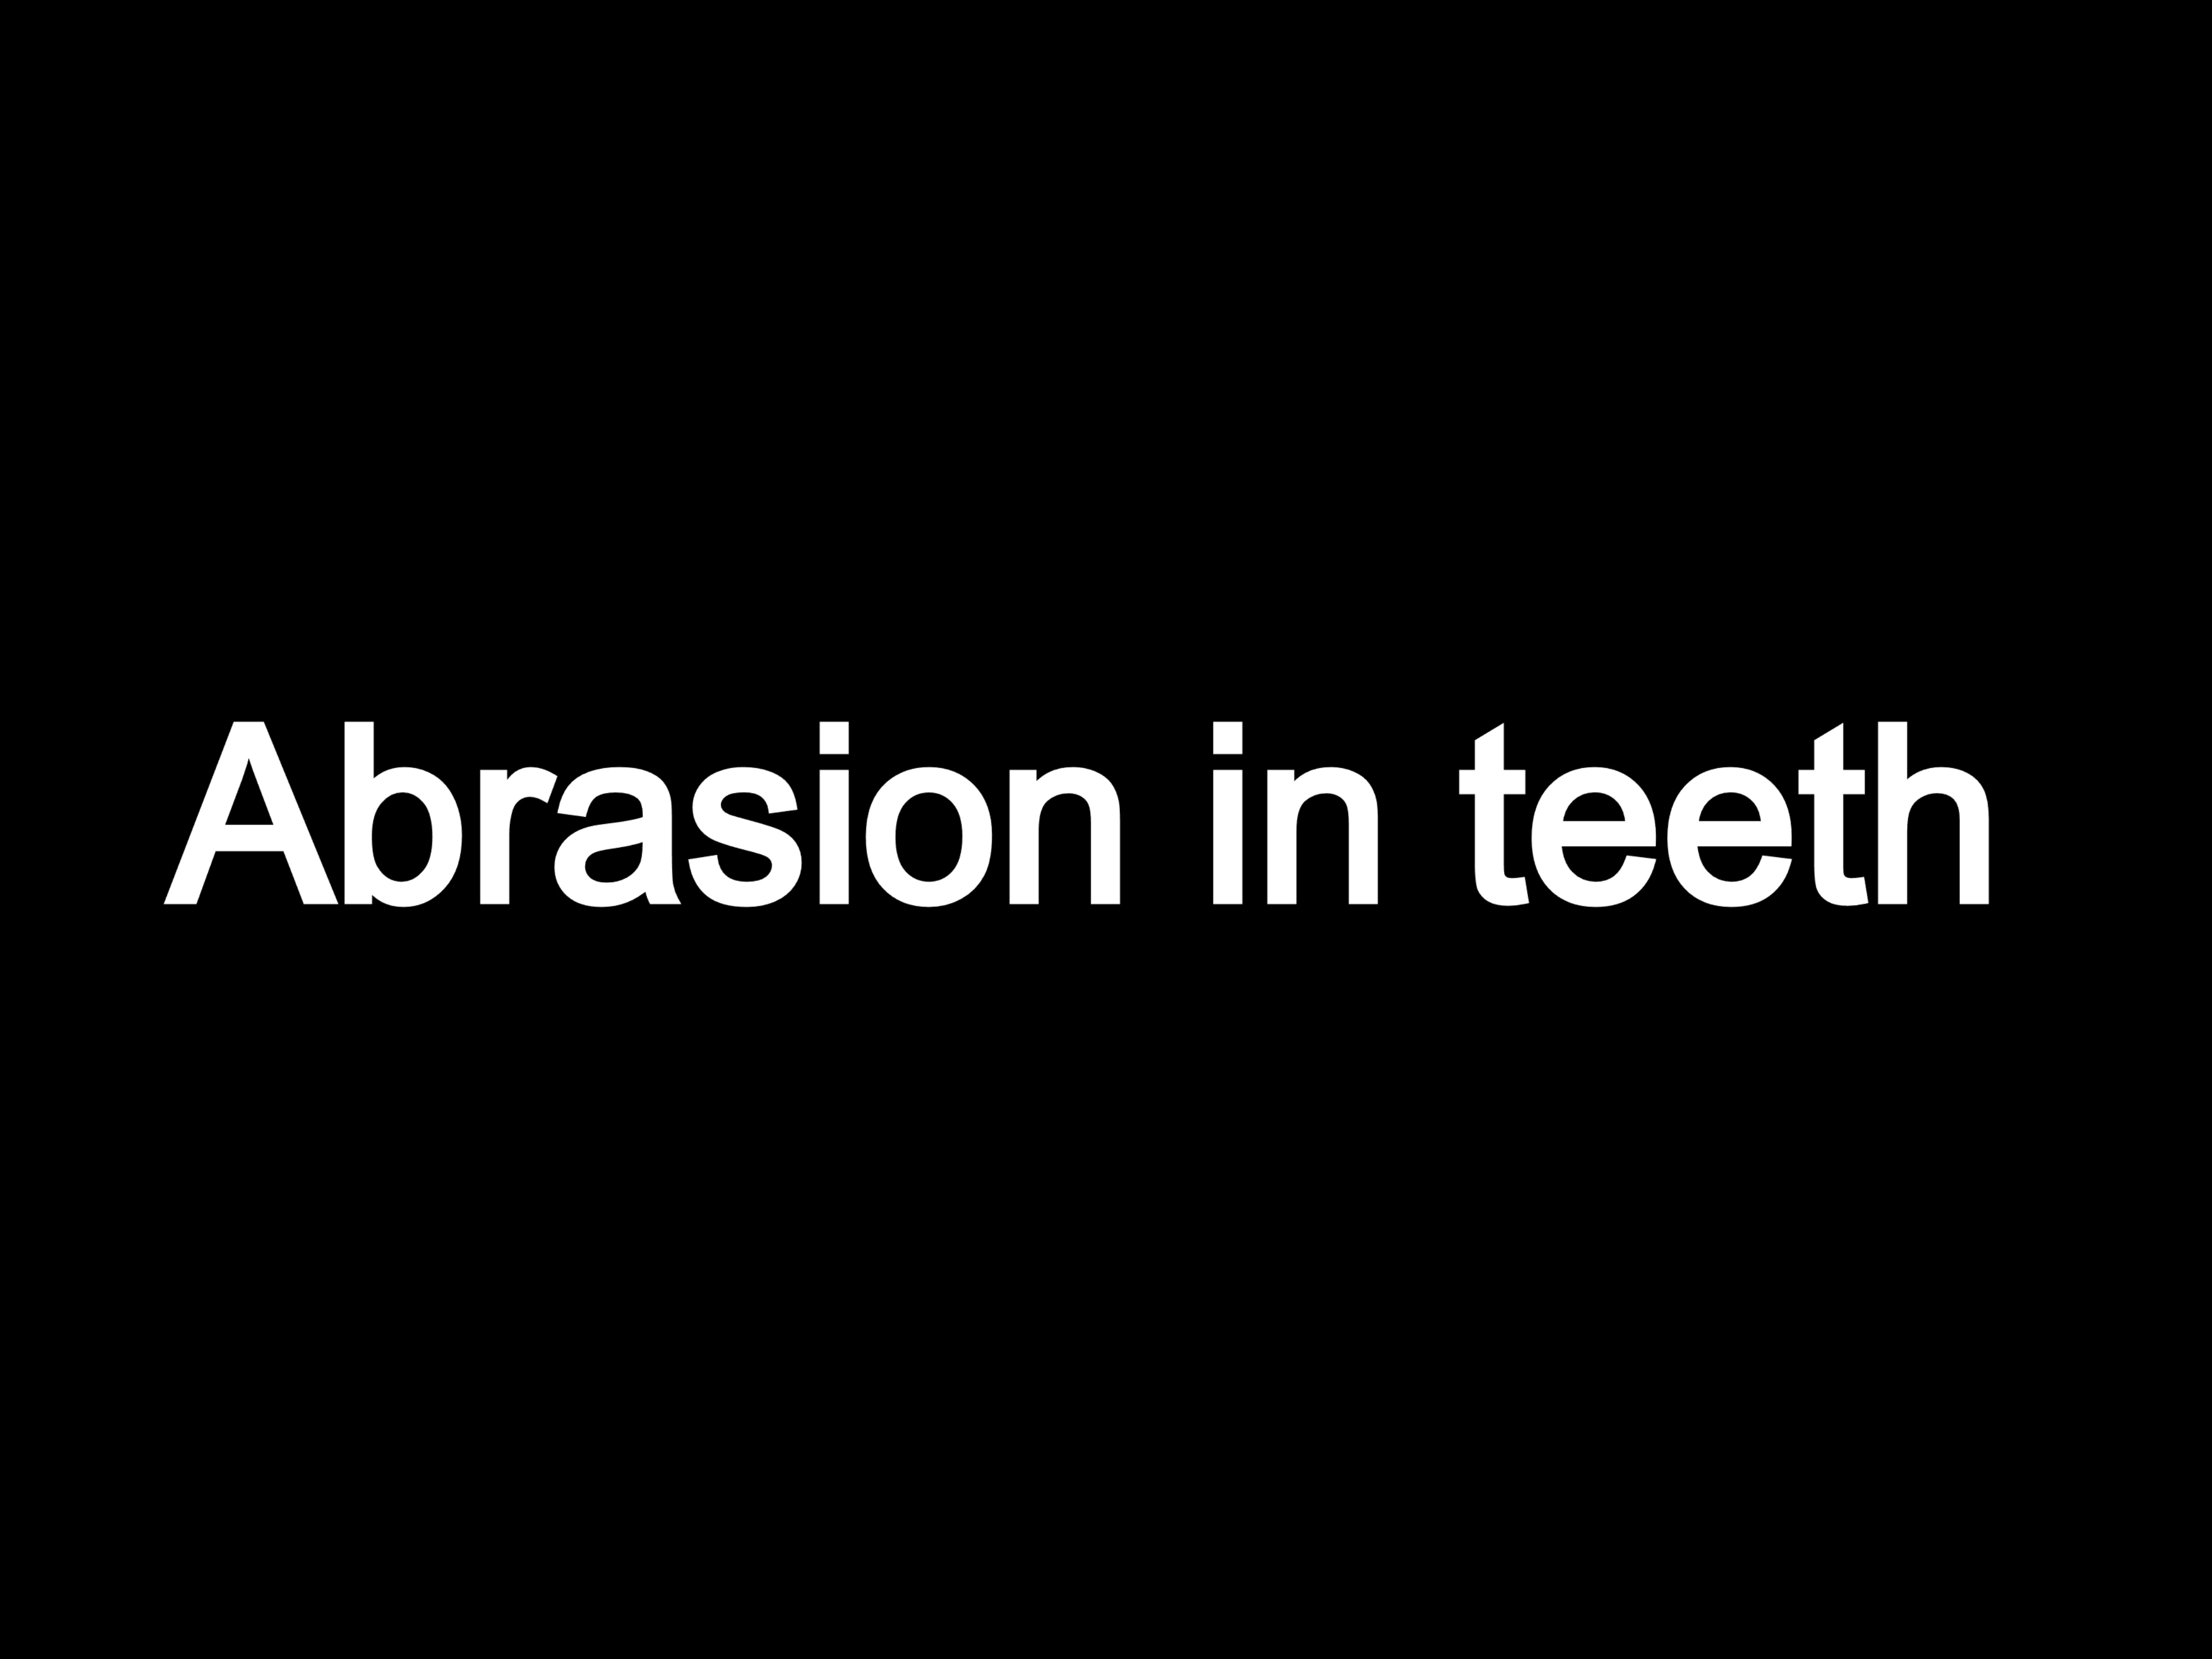 Abrasion in teeth